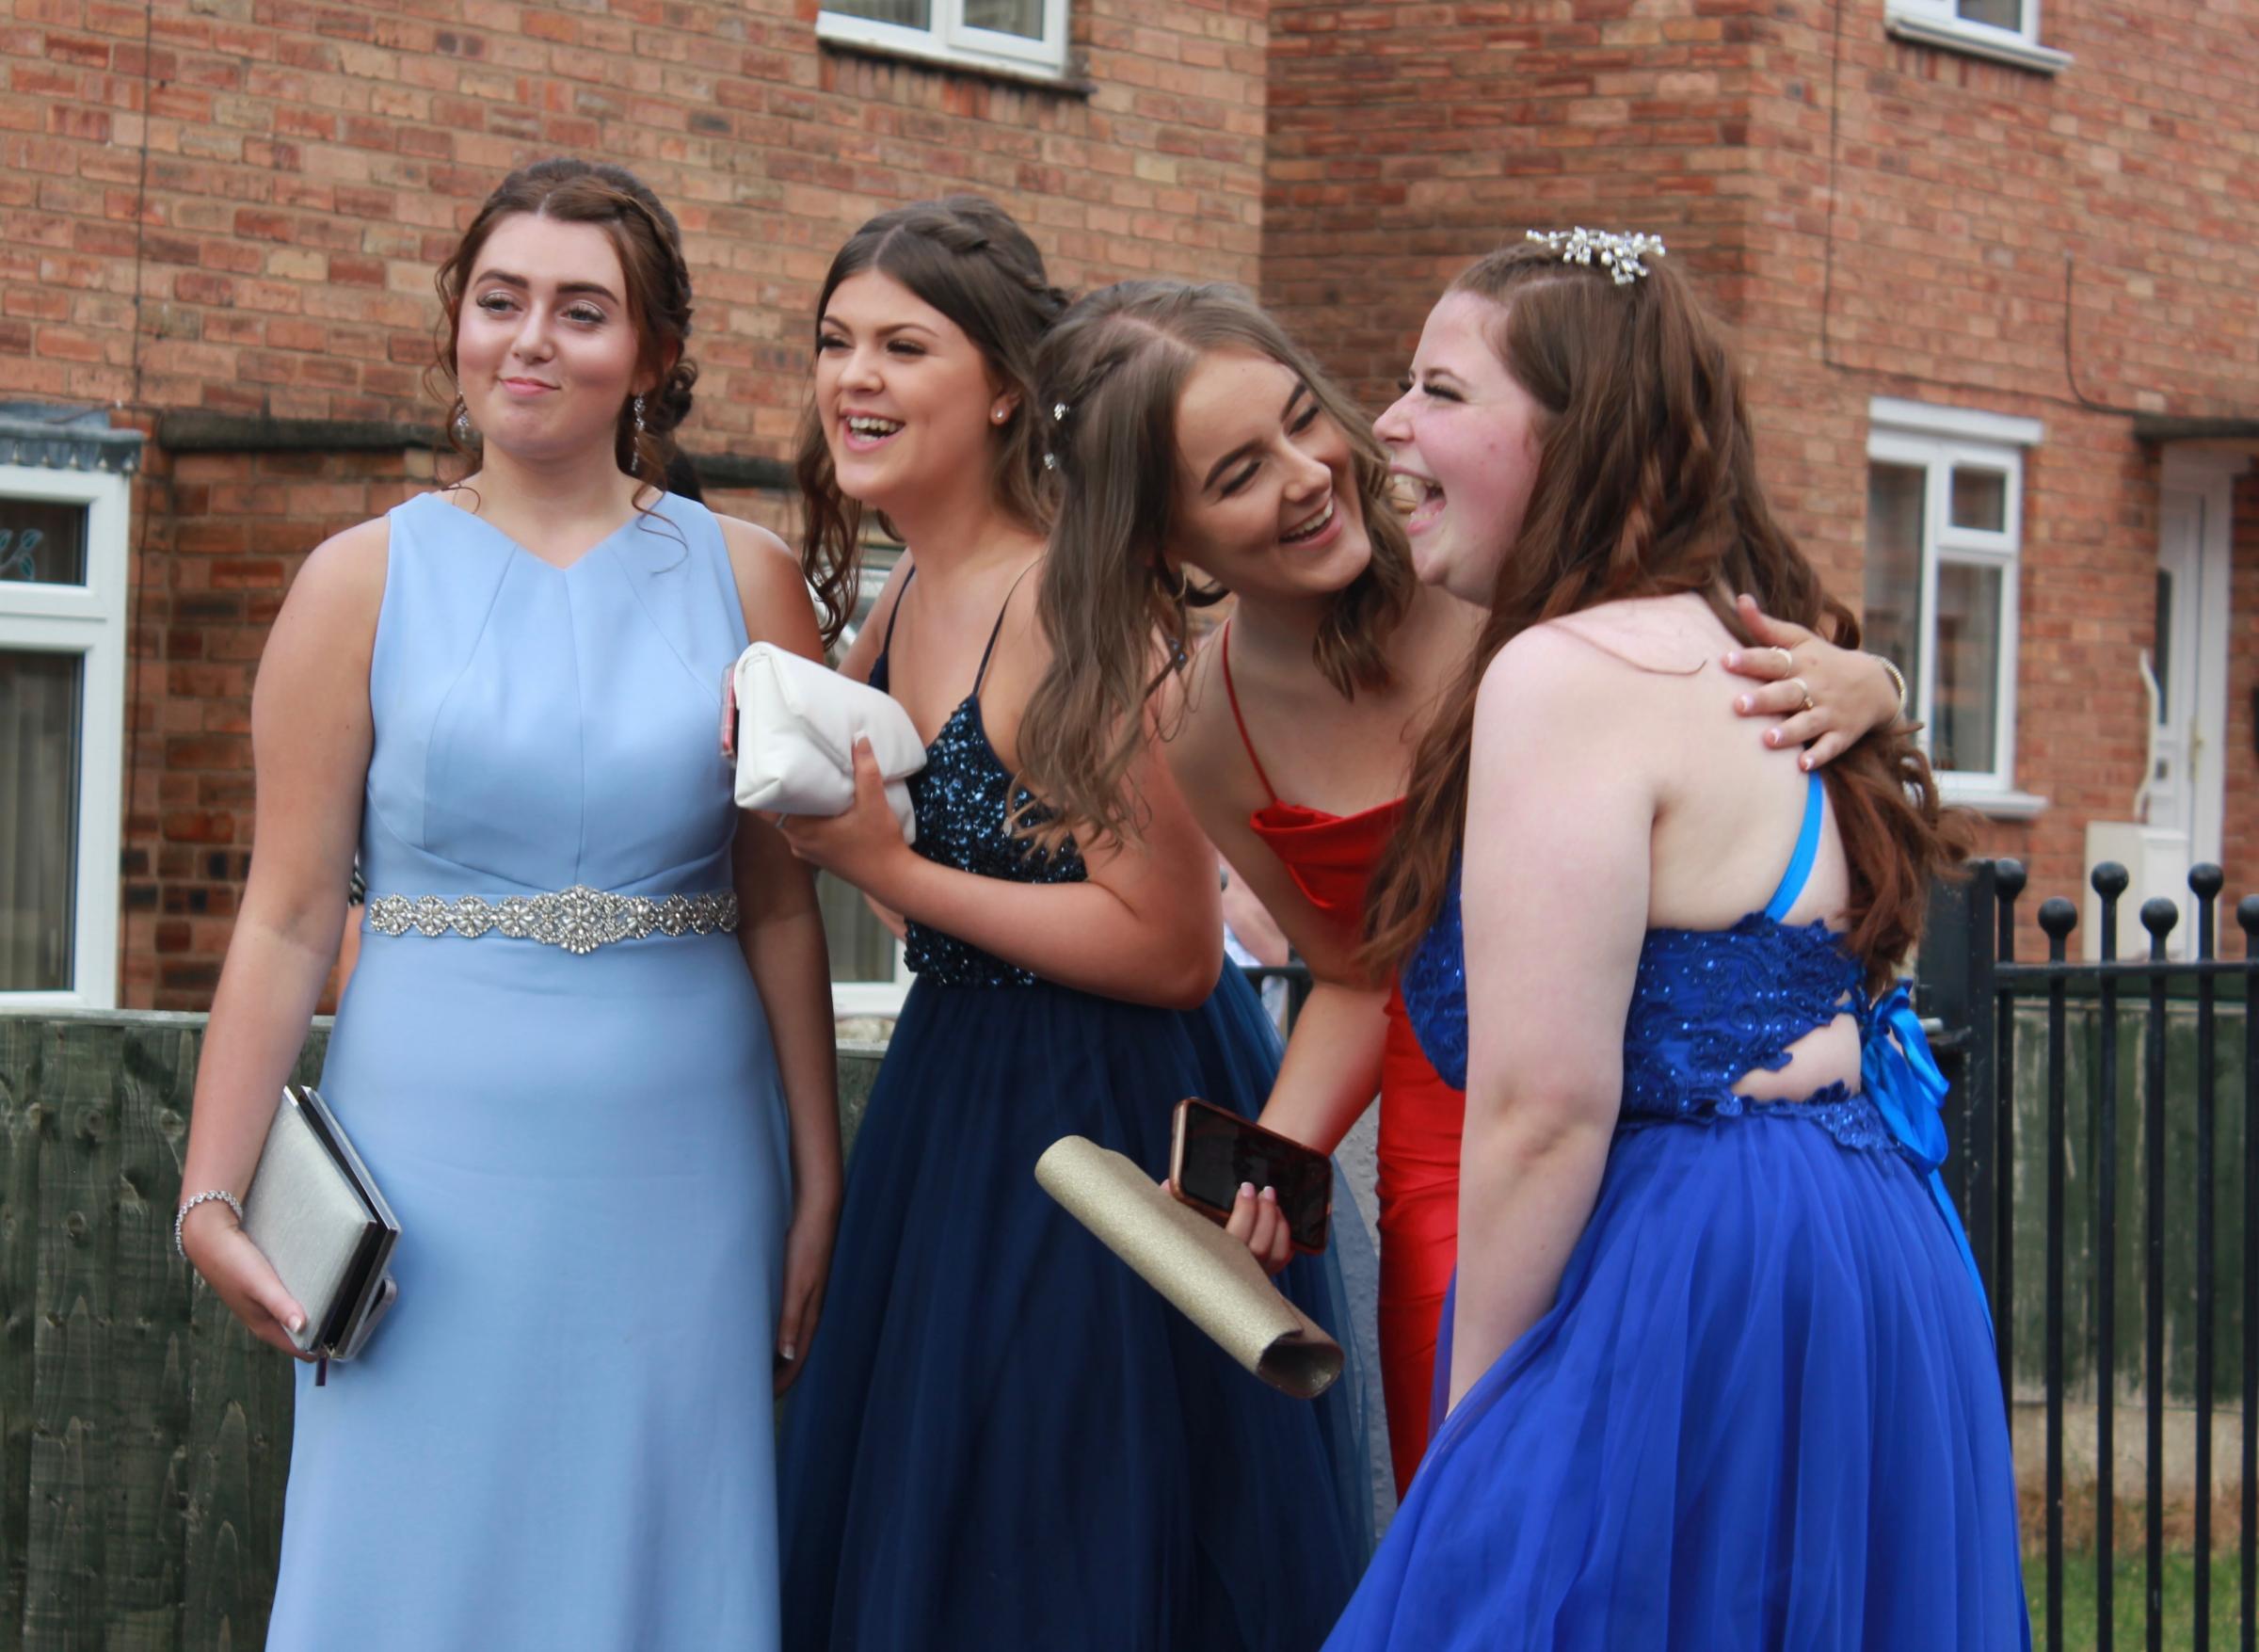 Rhosnesni High School prom for, from left, Kiera Jefferys, Ffion Roberts, Lauryn Boyle and Mia Rowlands.